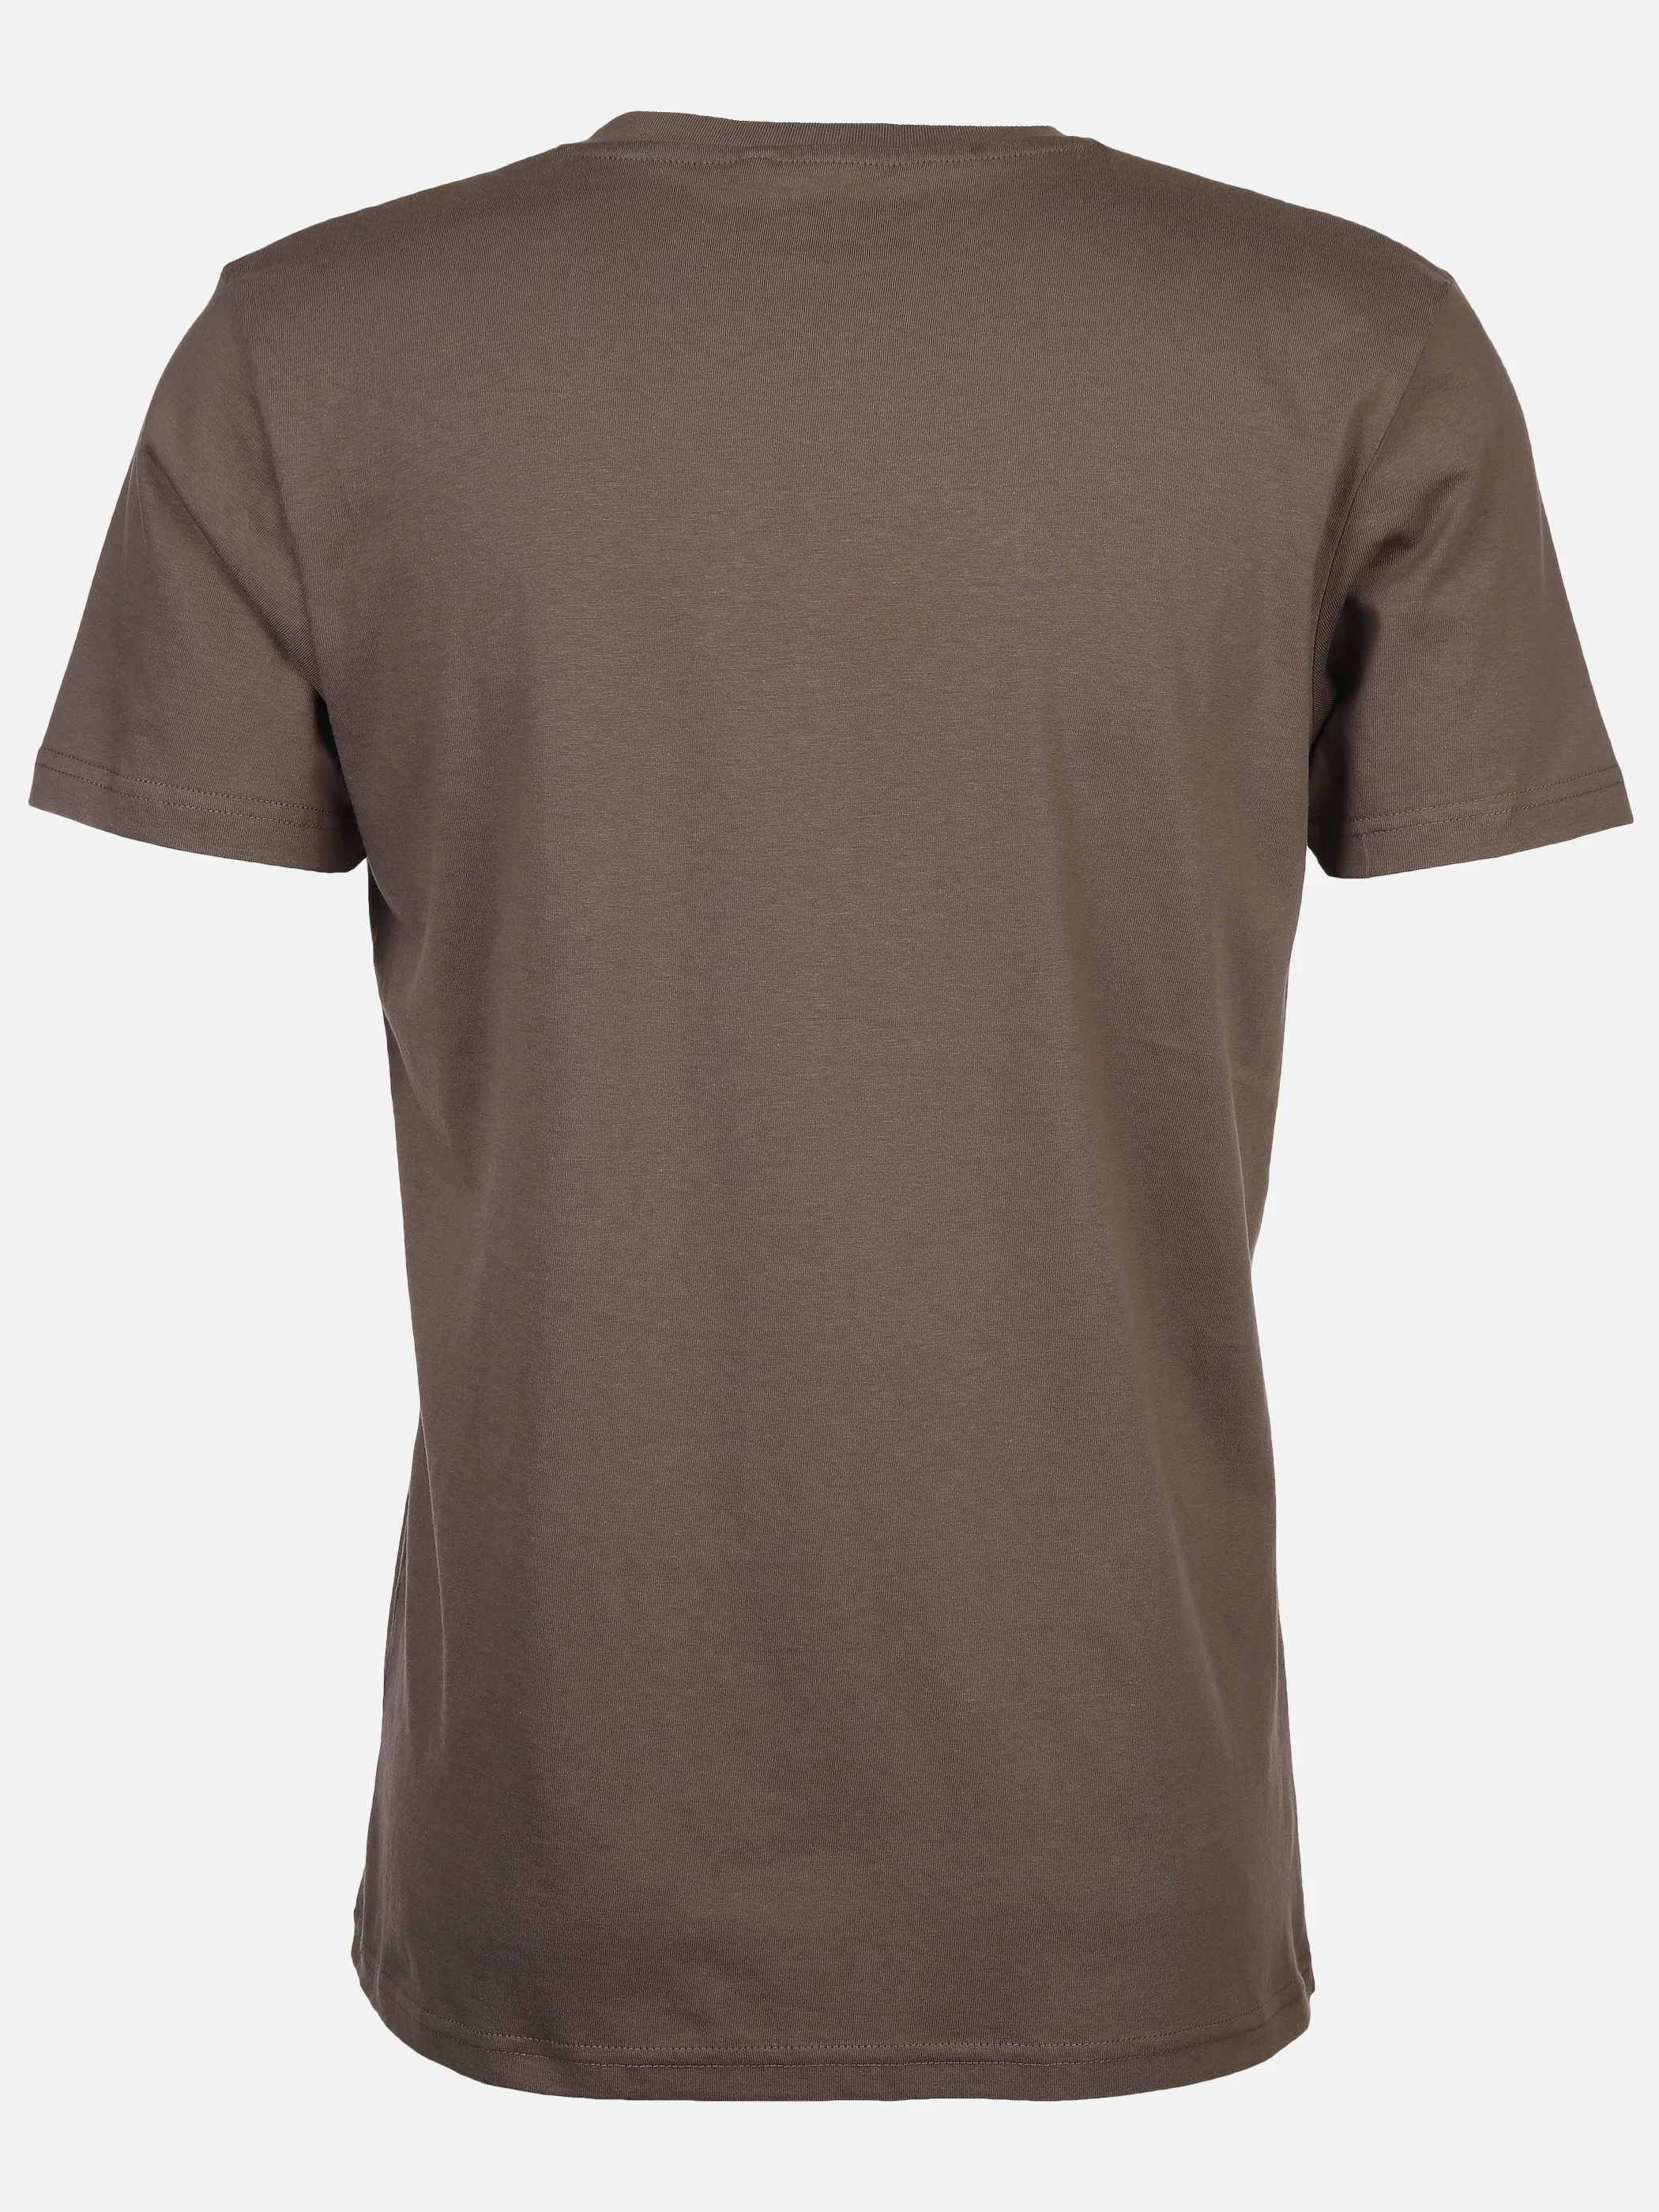 One Way YF-He T-Shirt, Basic Braun 889443 18-1304TCX 2